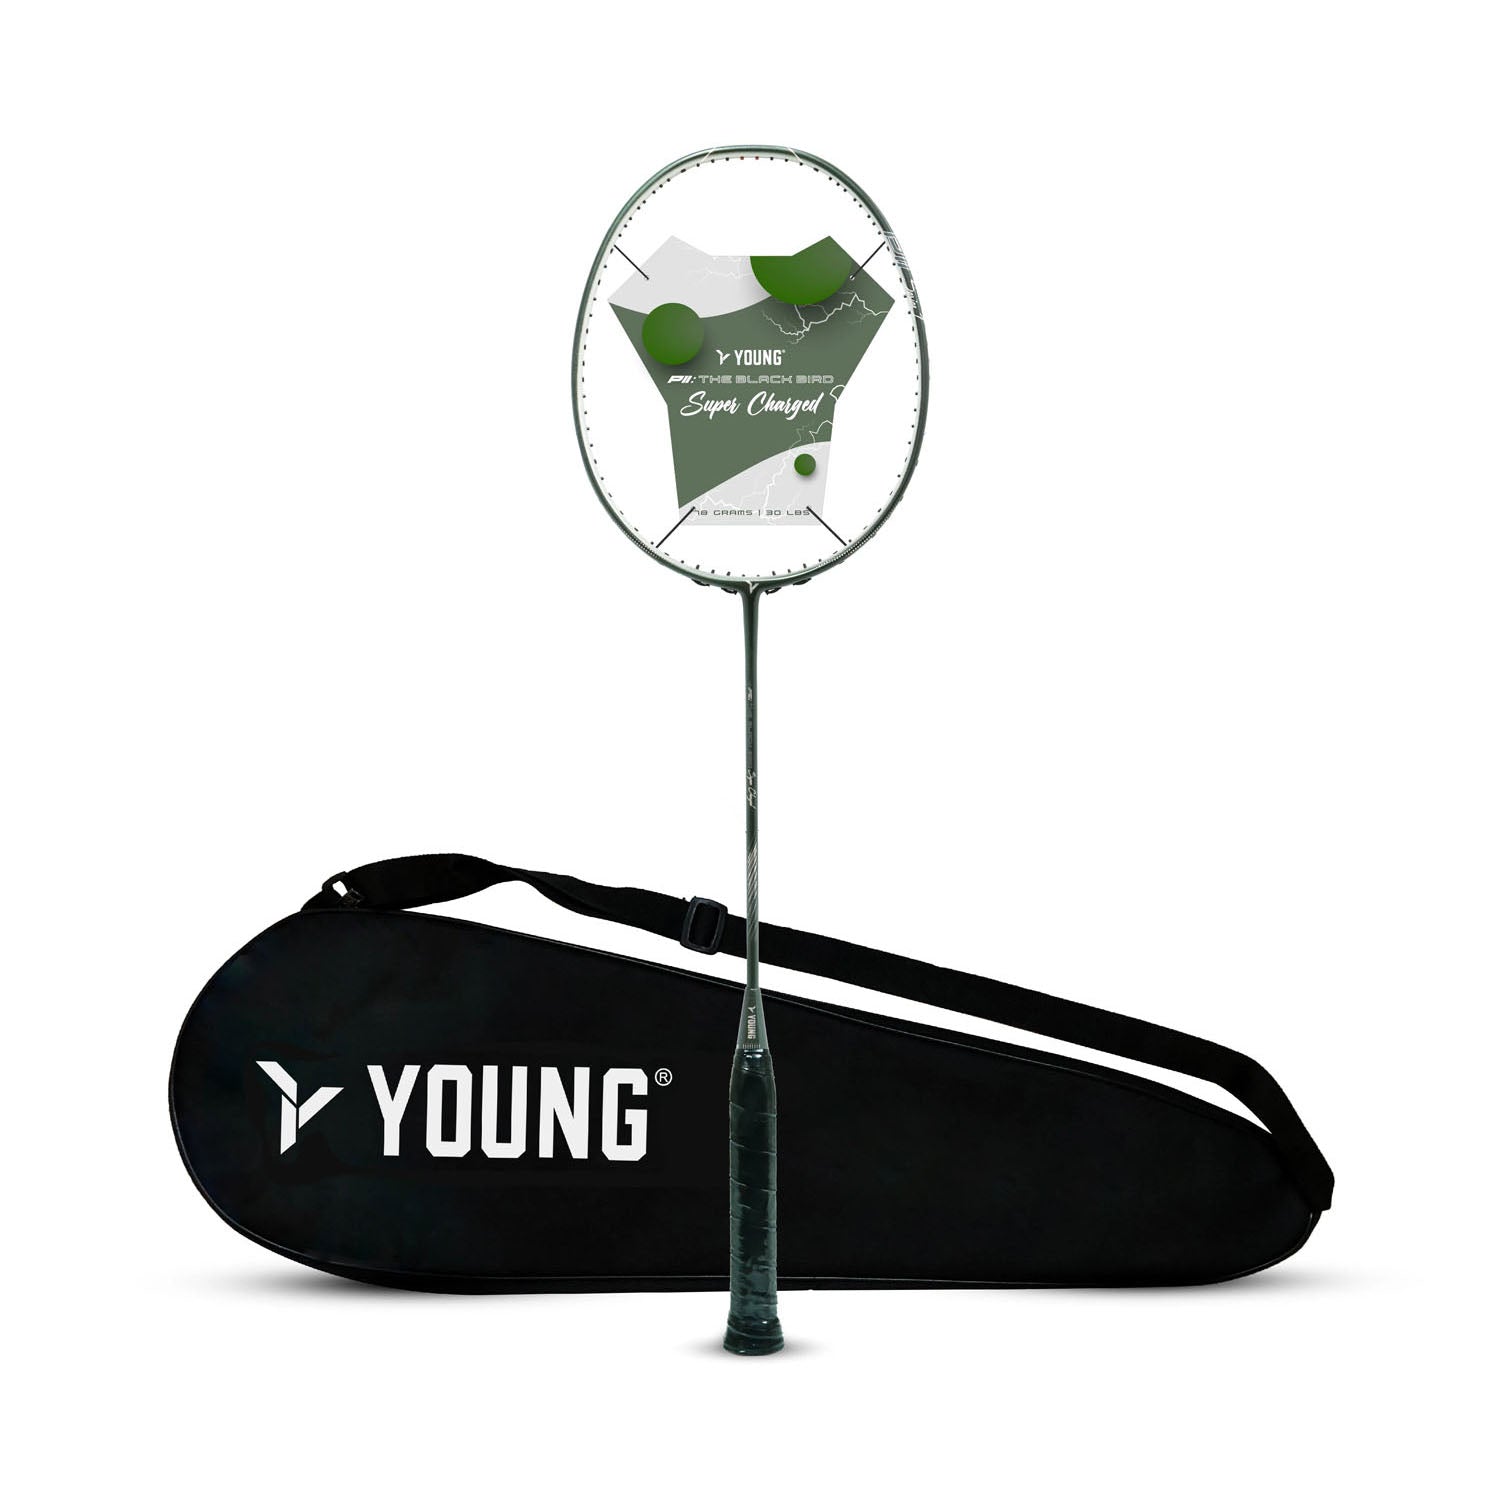 Young P11 The Black Bird Super Charged Badminton Racquet - Best Price online Prokicksports.com